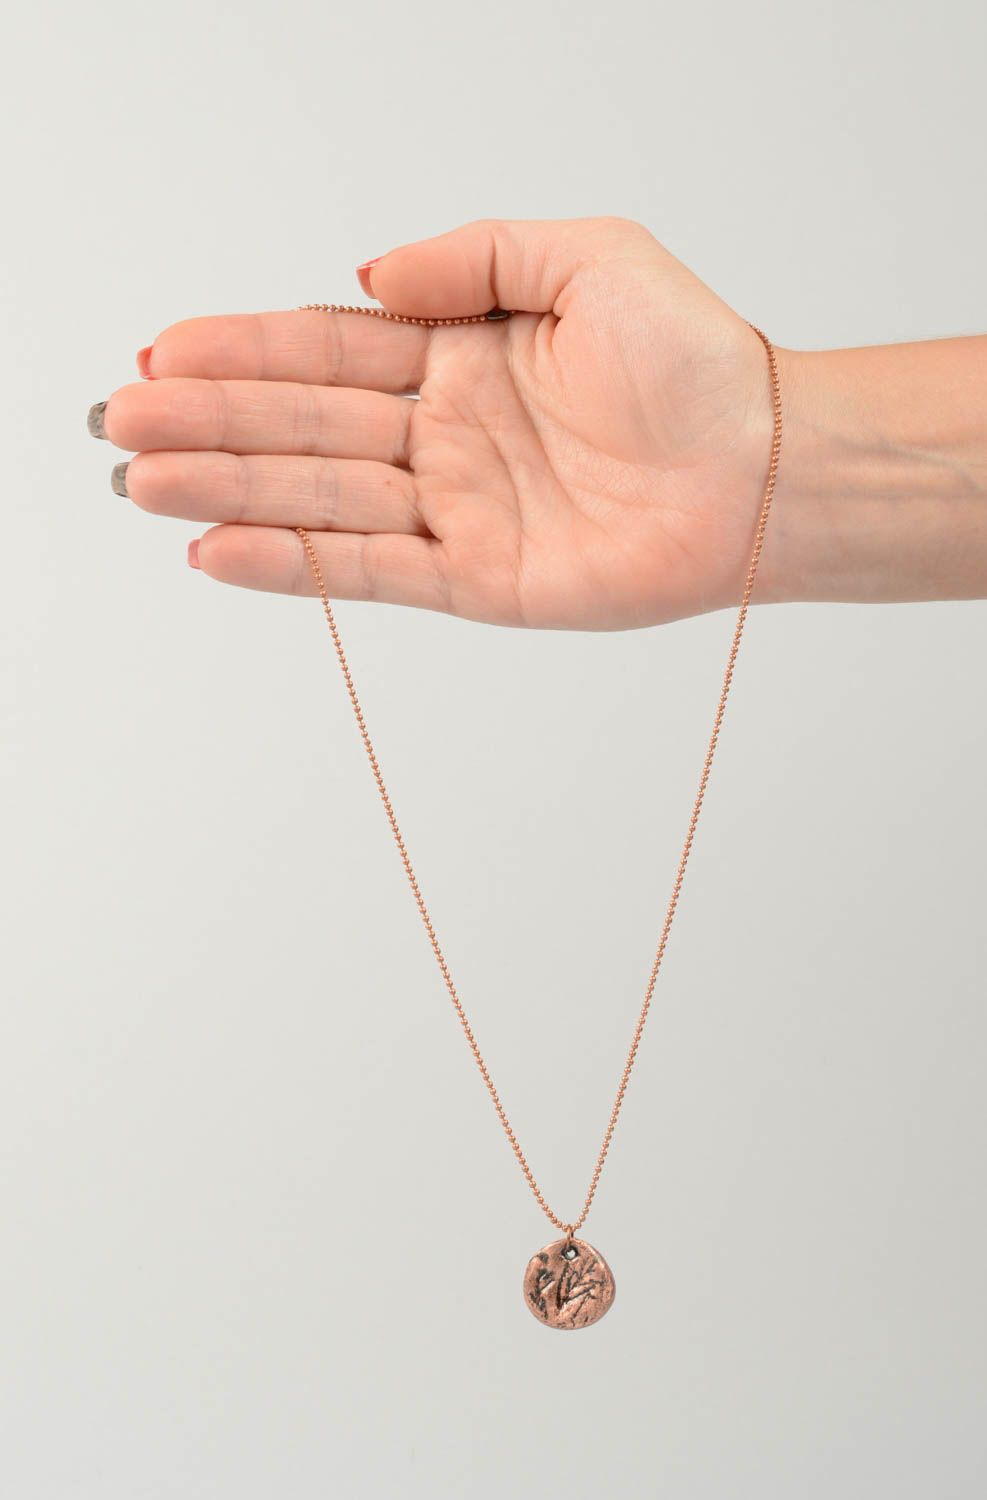 Handmade jewelry round pendant polymer clay pendant plastic pendant womens gift photo 4